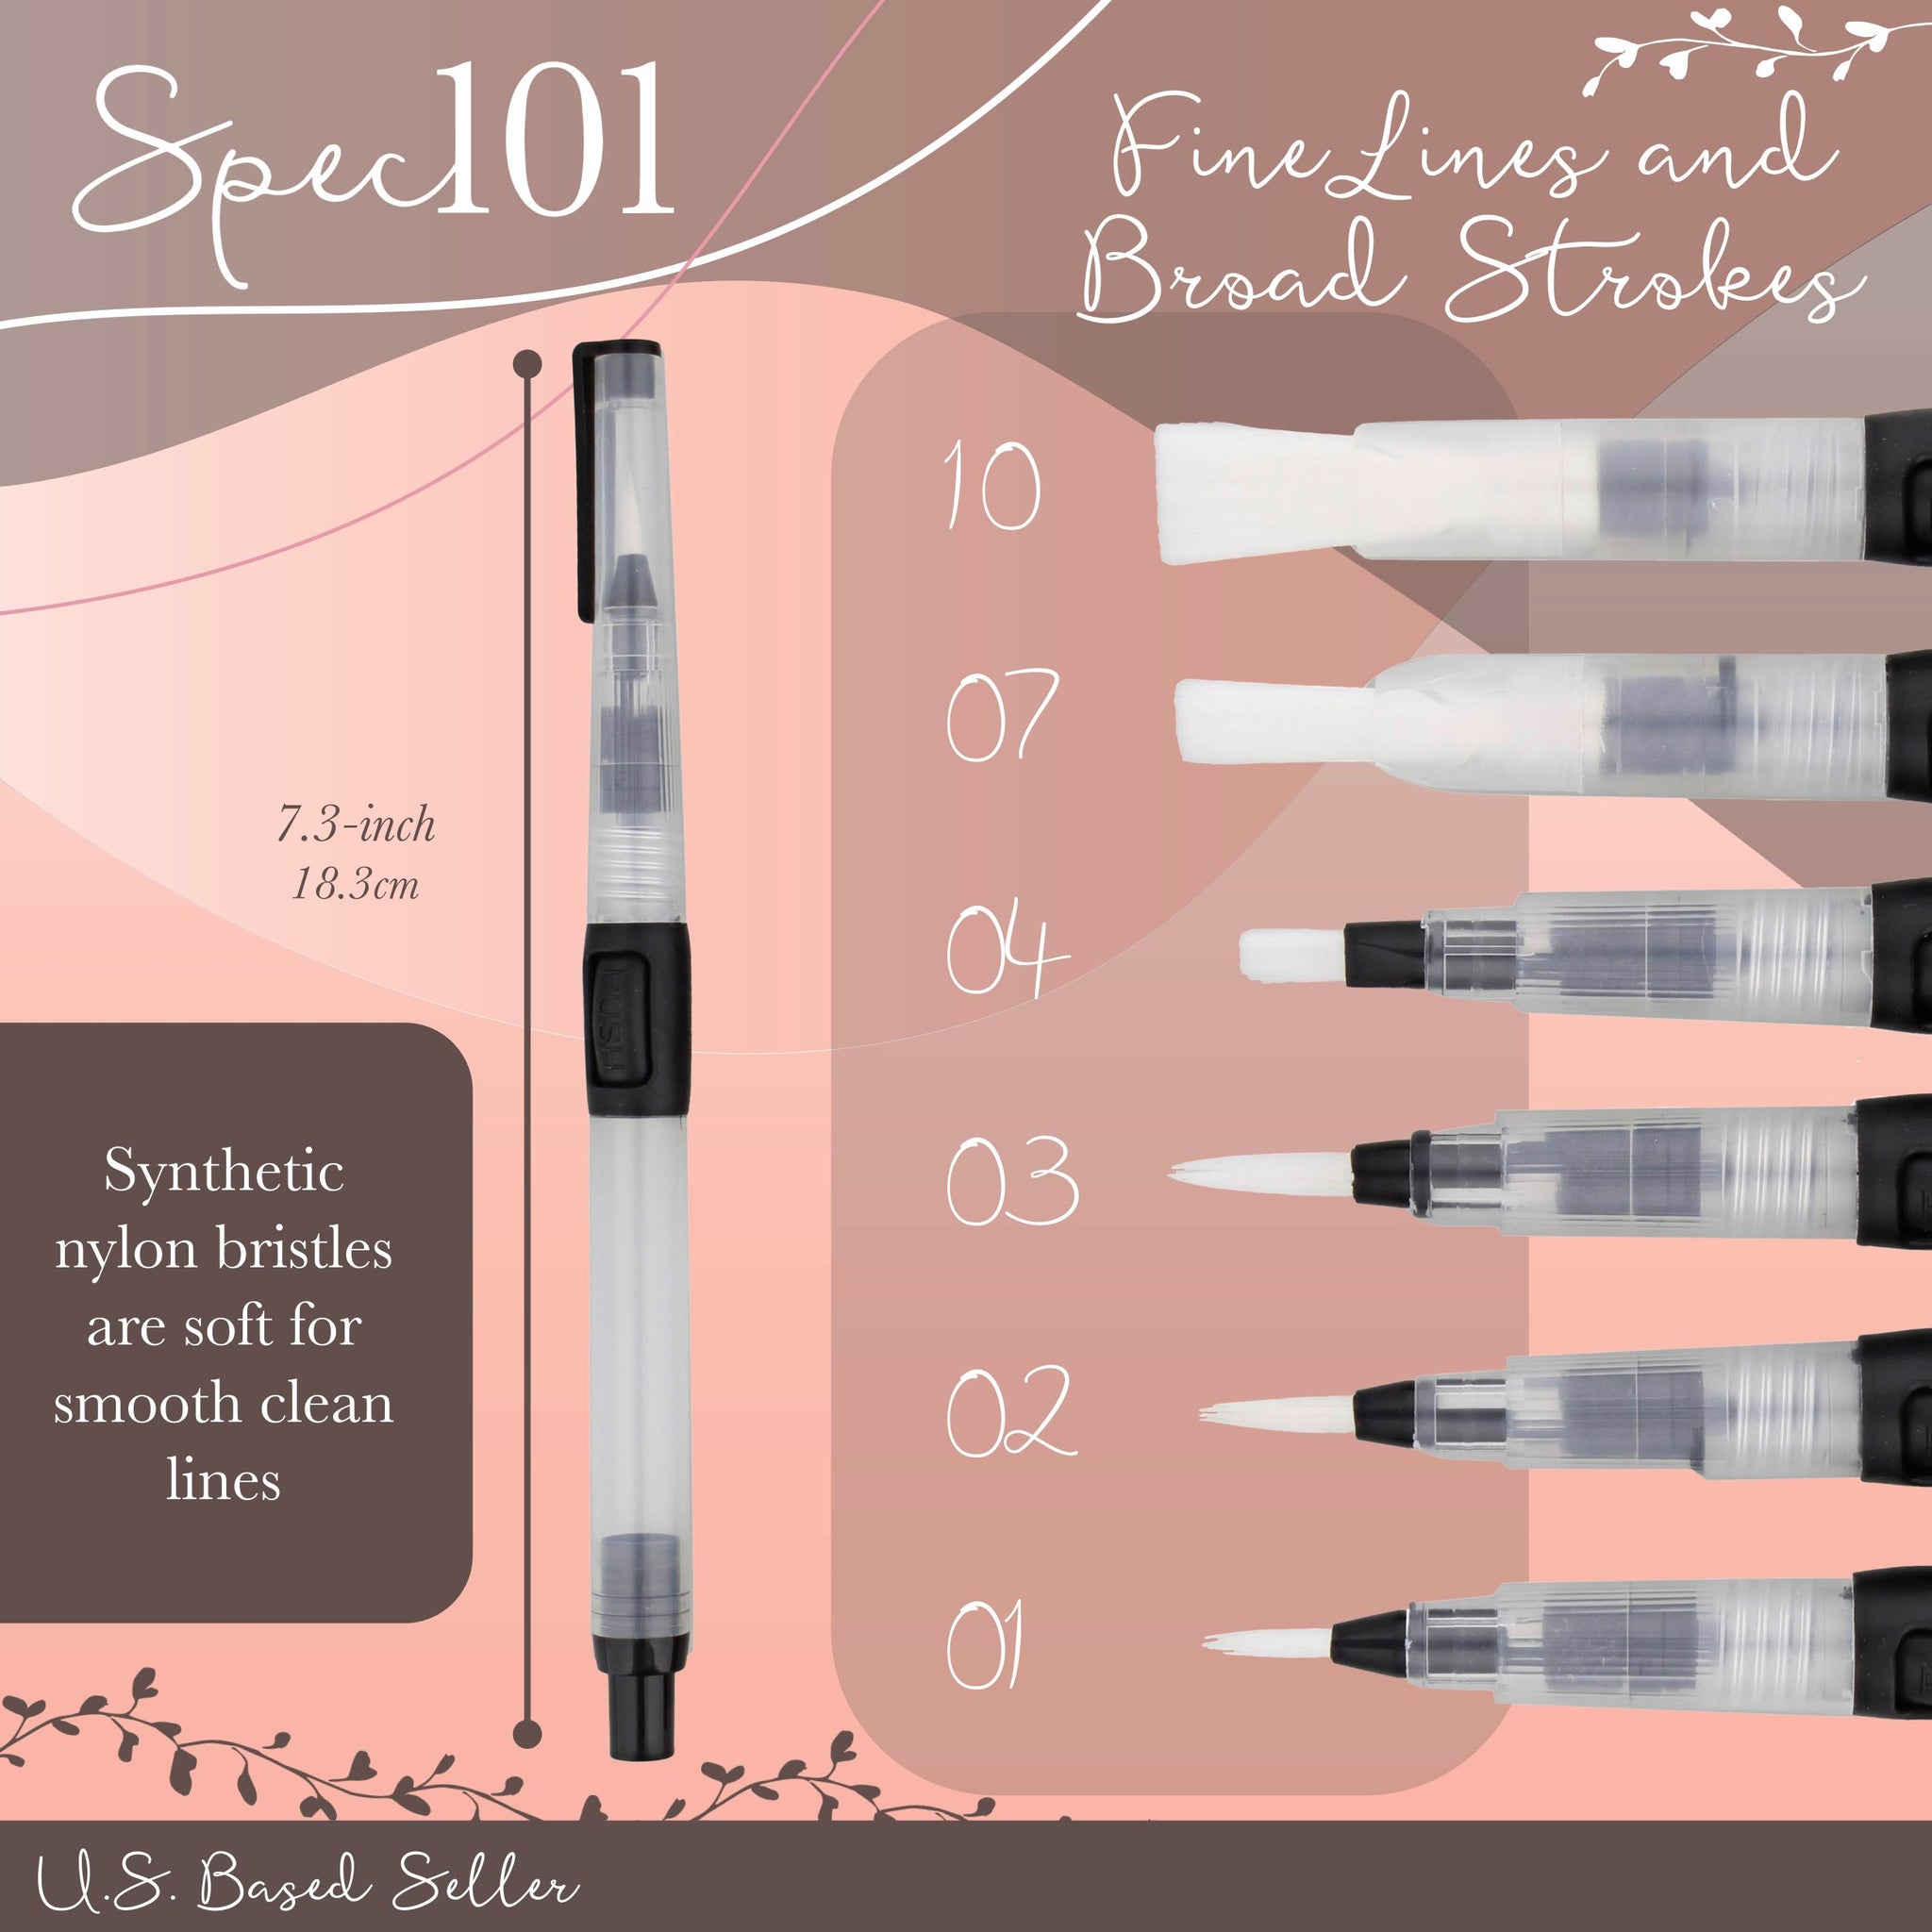 Spec101 Watercolor Pens Brush Set - 24 Watercolor Brush Markers and 2 Blend Pens